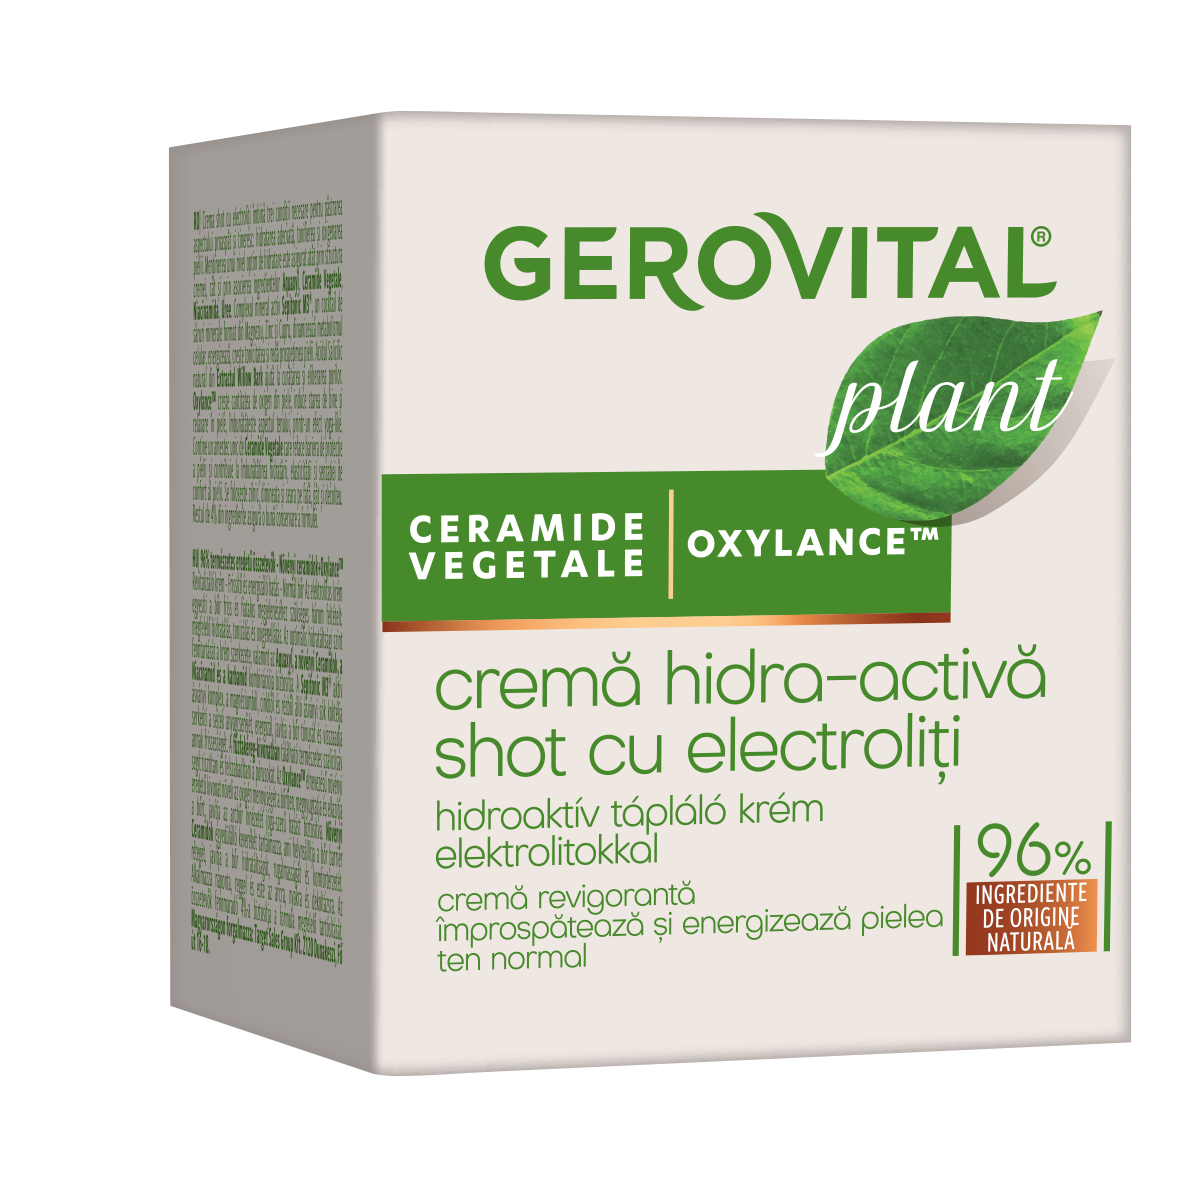 Crema Hidra-Activa Shot cu electroliti Plant, 50 ml, Gerovital